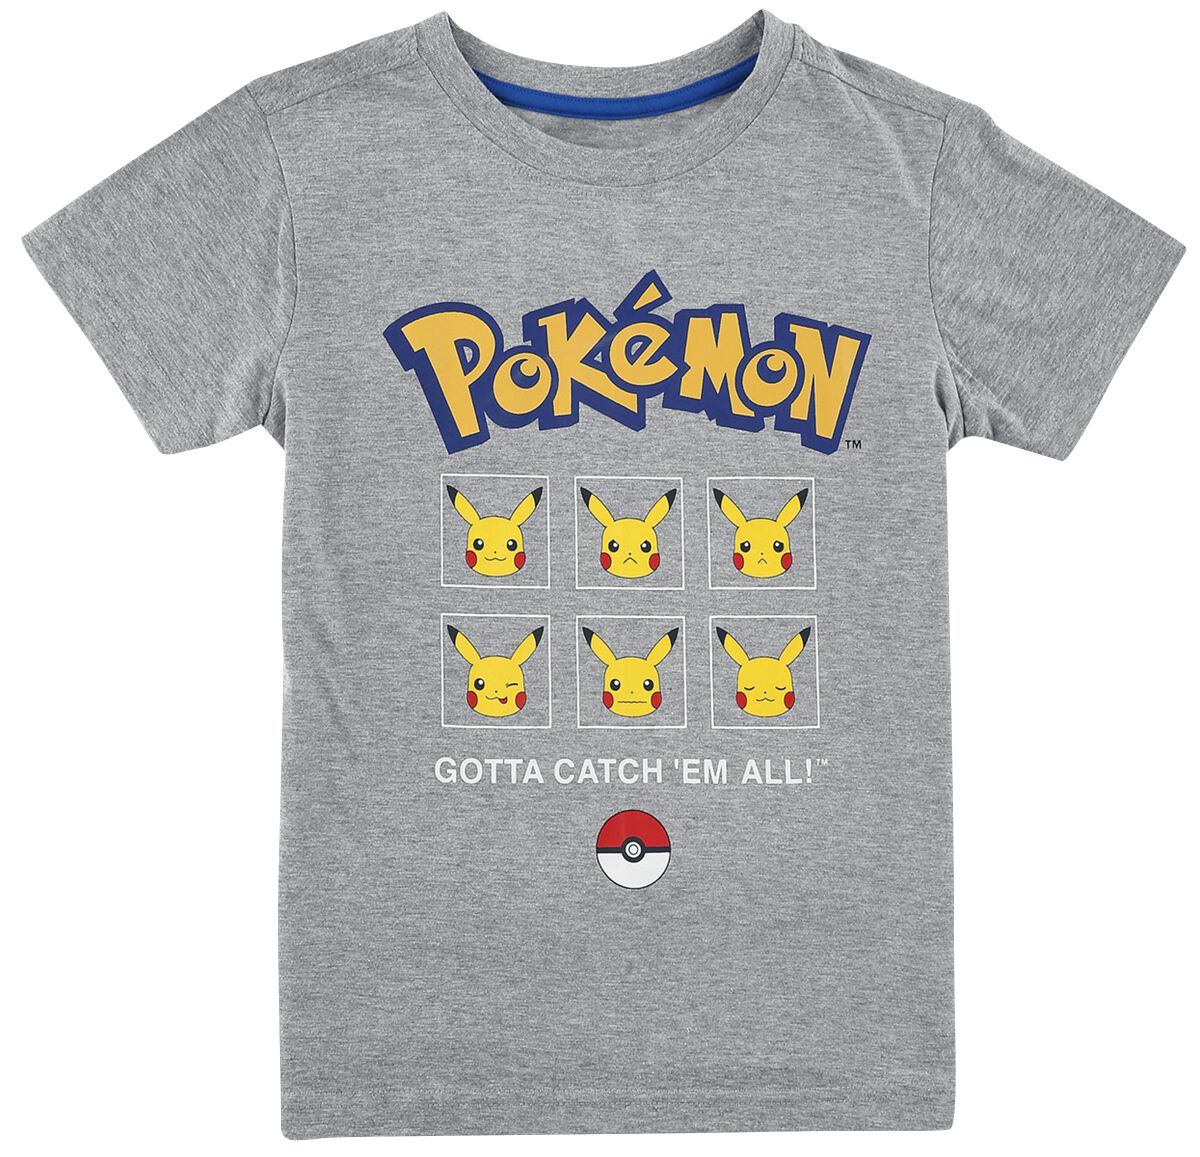 Pokémon Kids - Pikachu Faces T-Shirt mottled grey